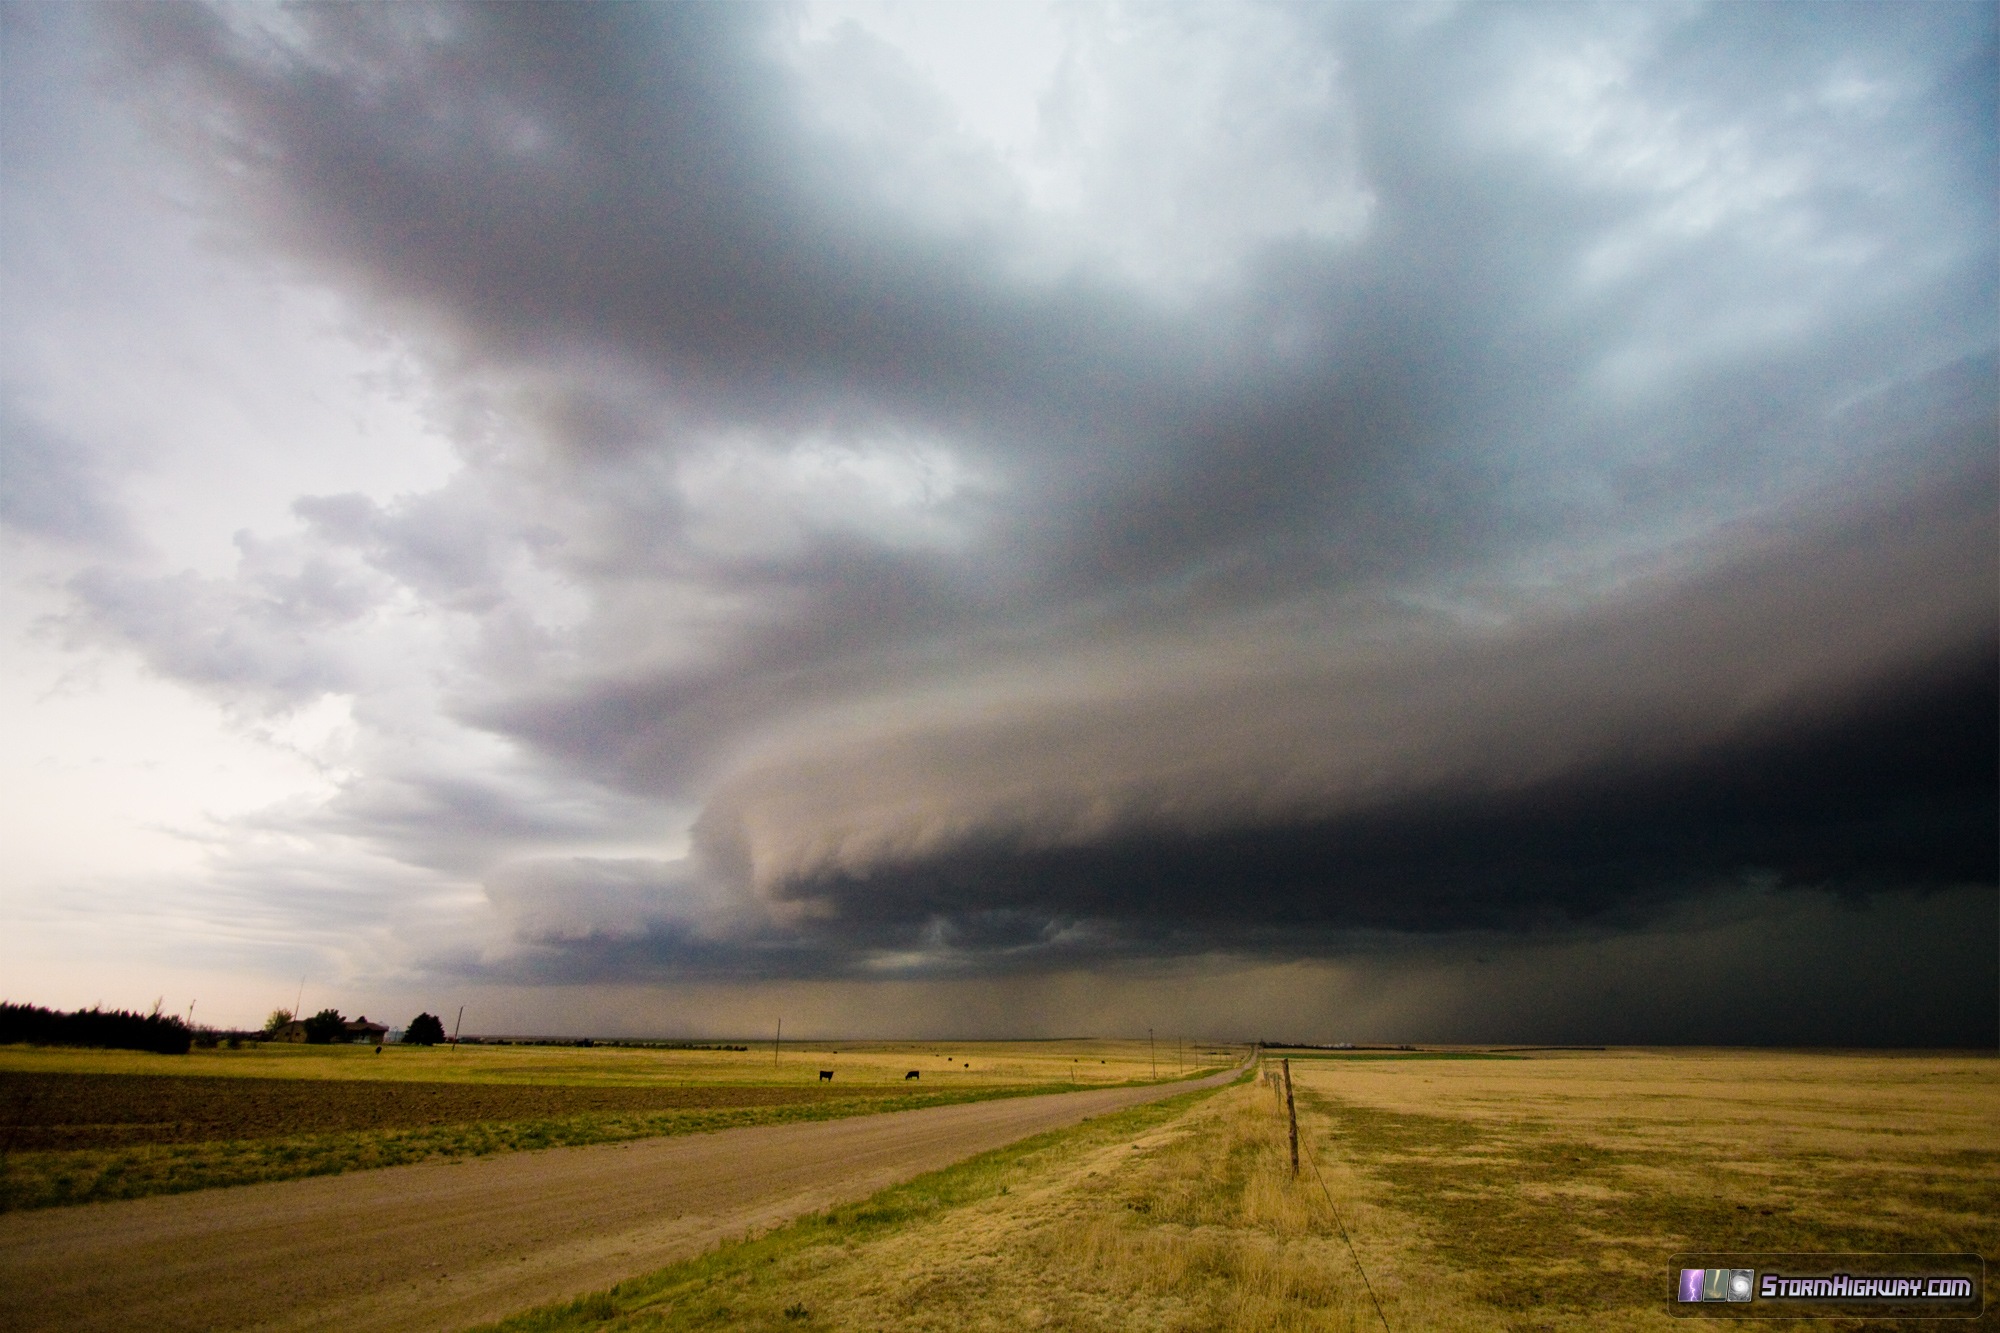 Severe thunderstorm - Cheyenne Wells, Colorado - May 22, 2014